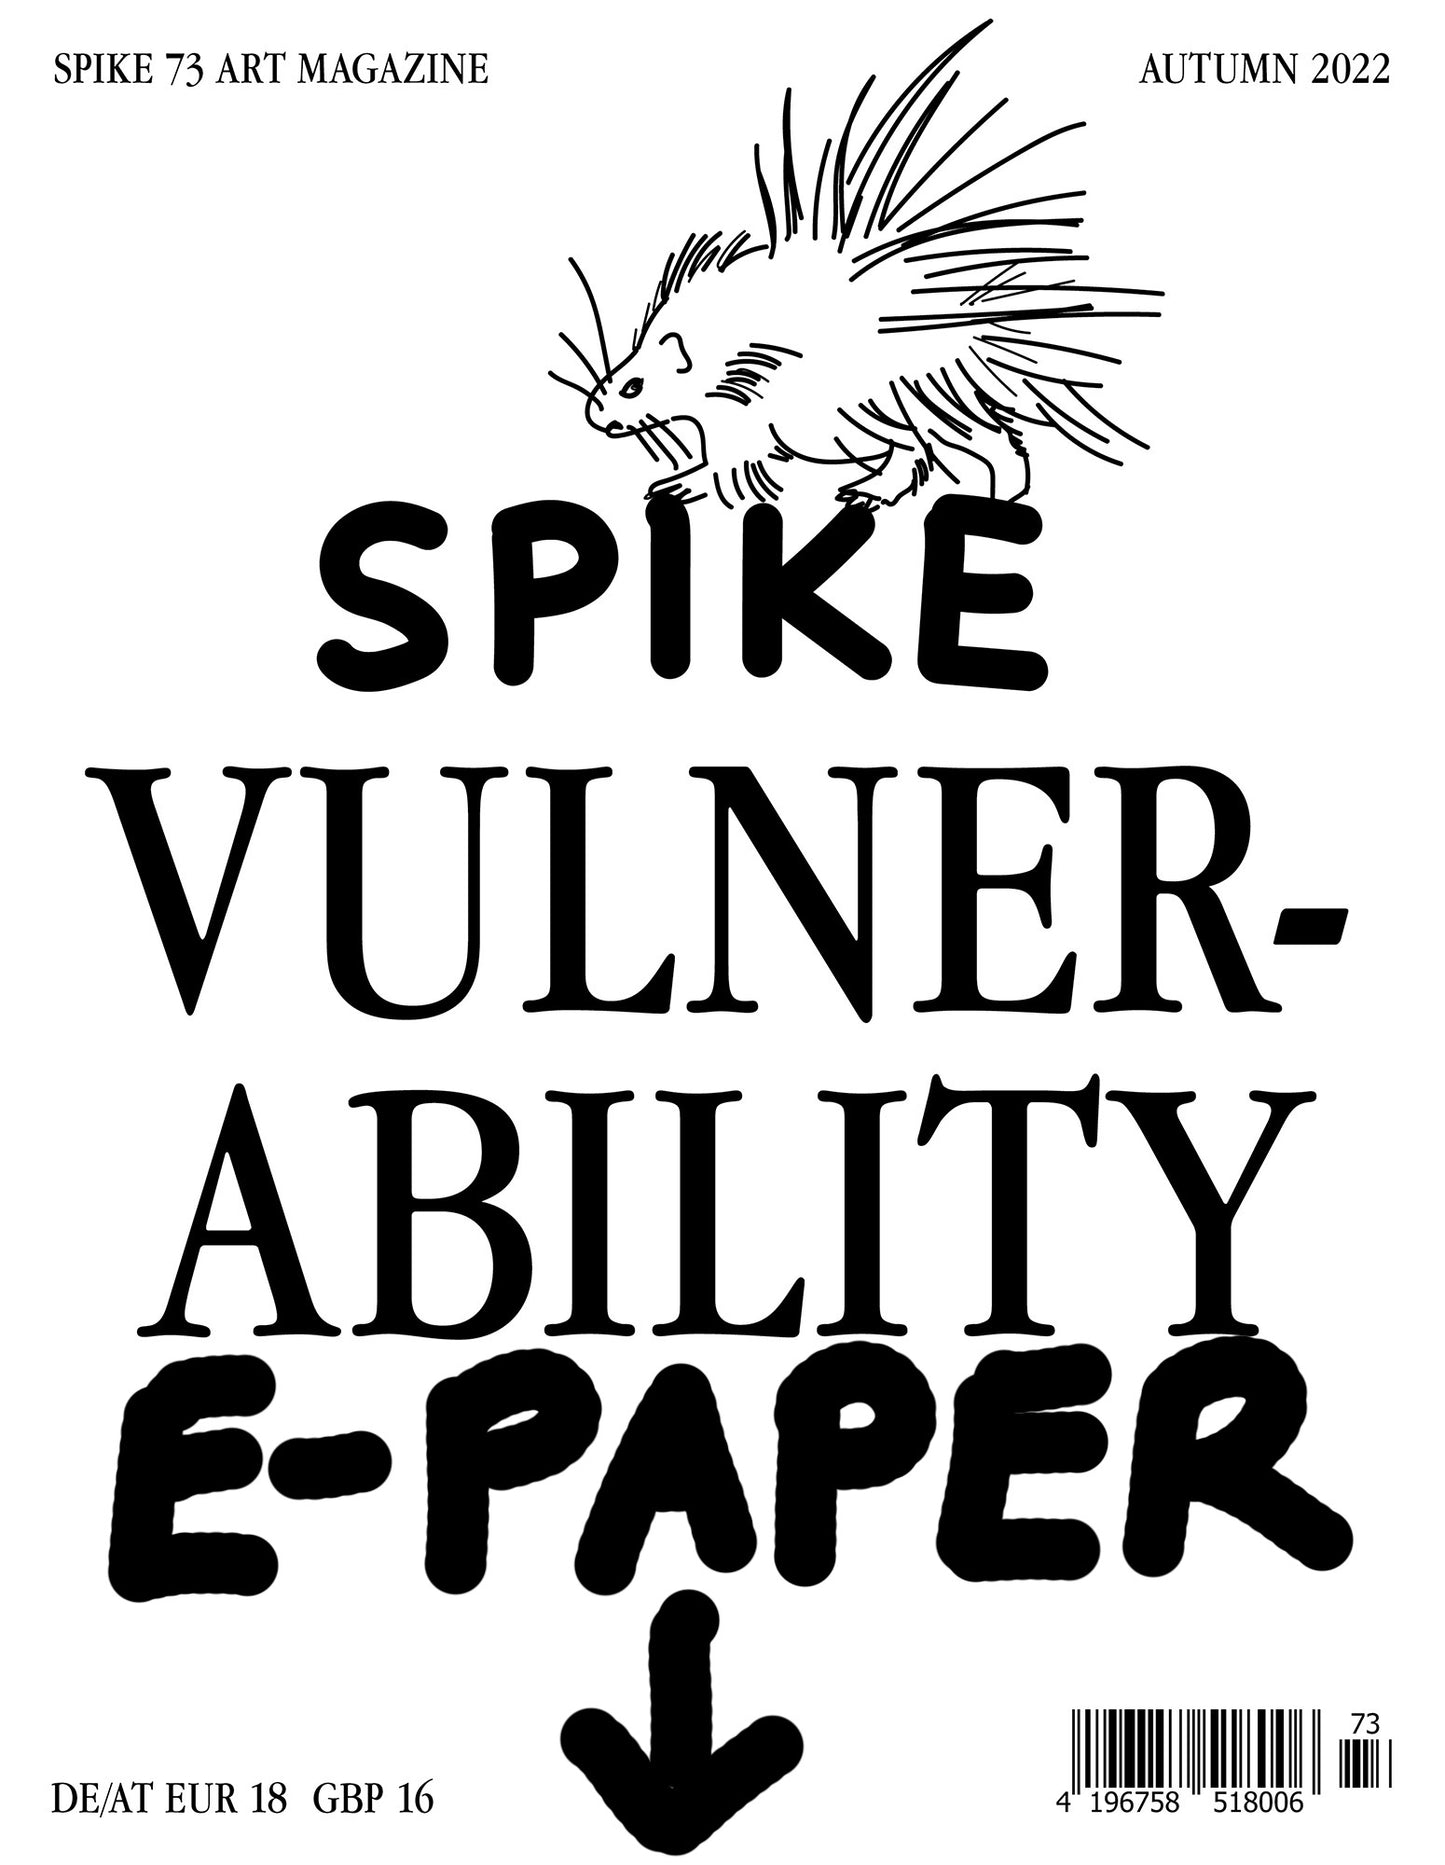 Spike ePaper (Issue 73): Vulnerability